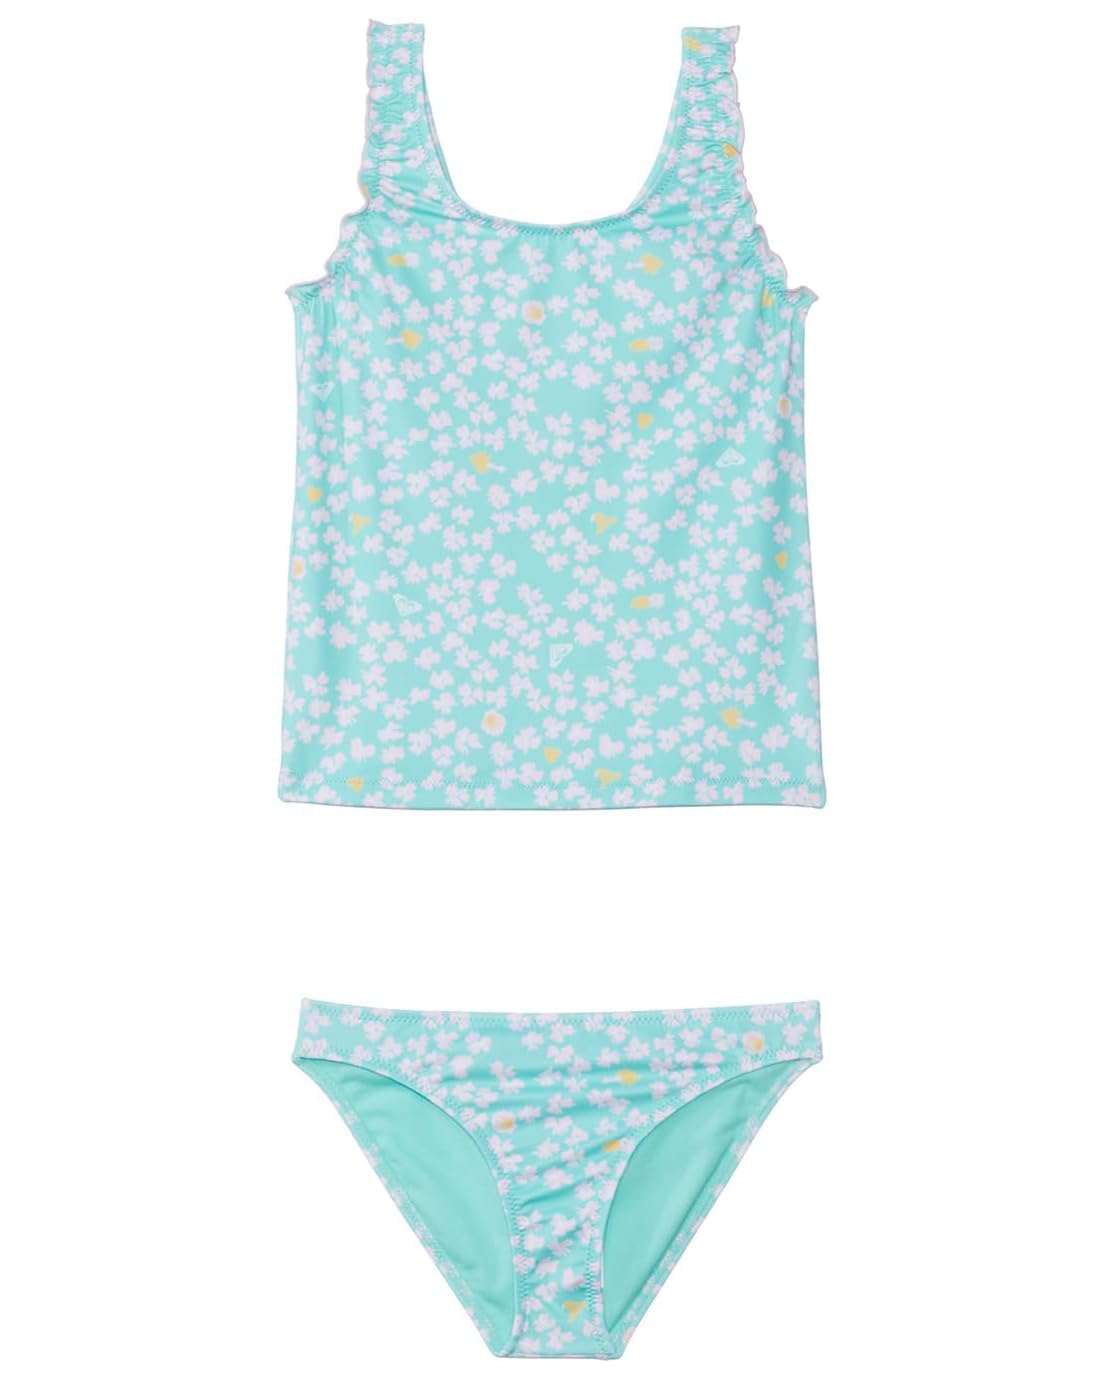 Roxy Kids Teenie Ditsy Tankini Set Swimsuit (Toddler/Little Kids/Big Kids)